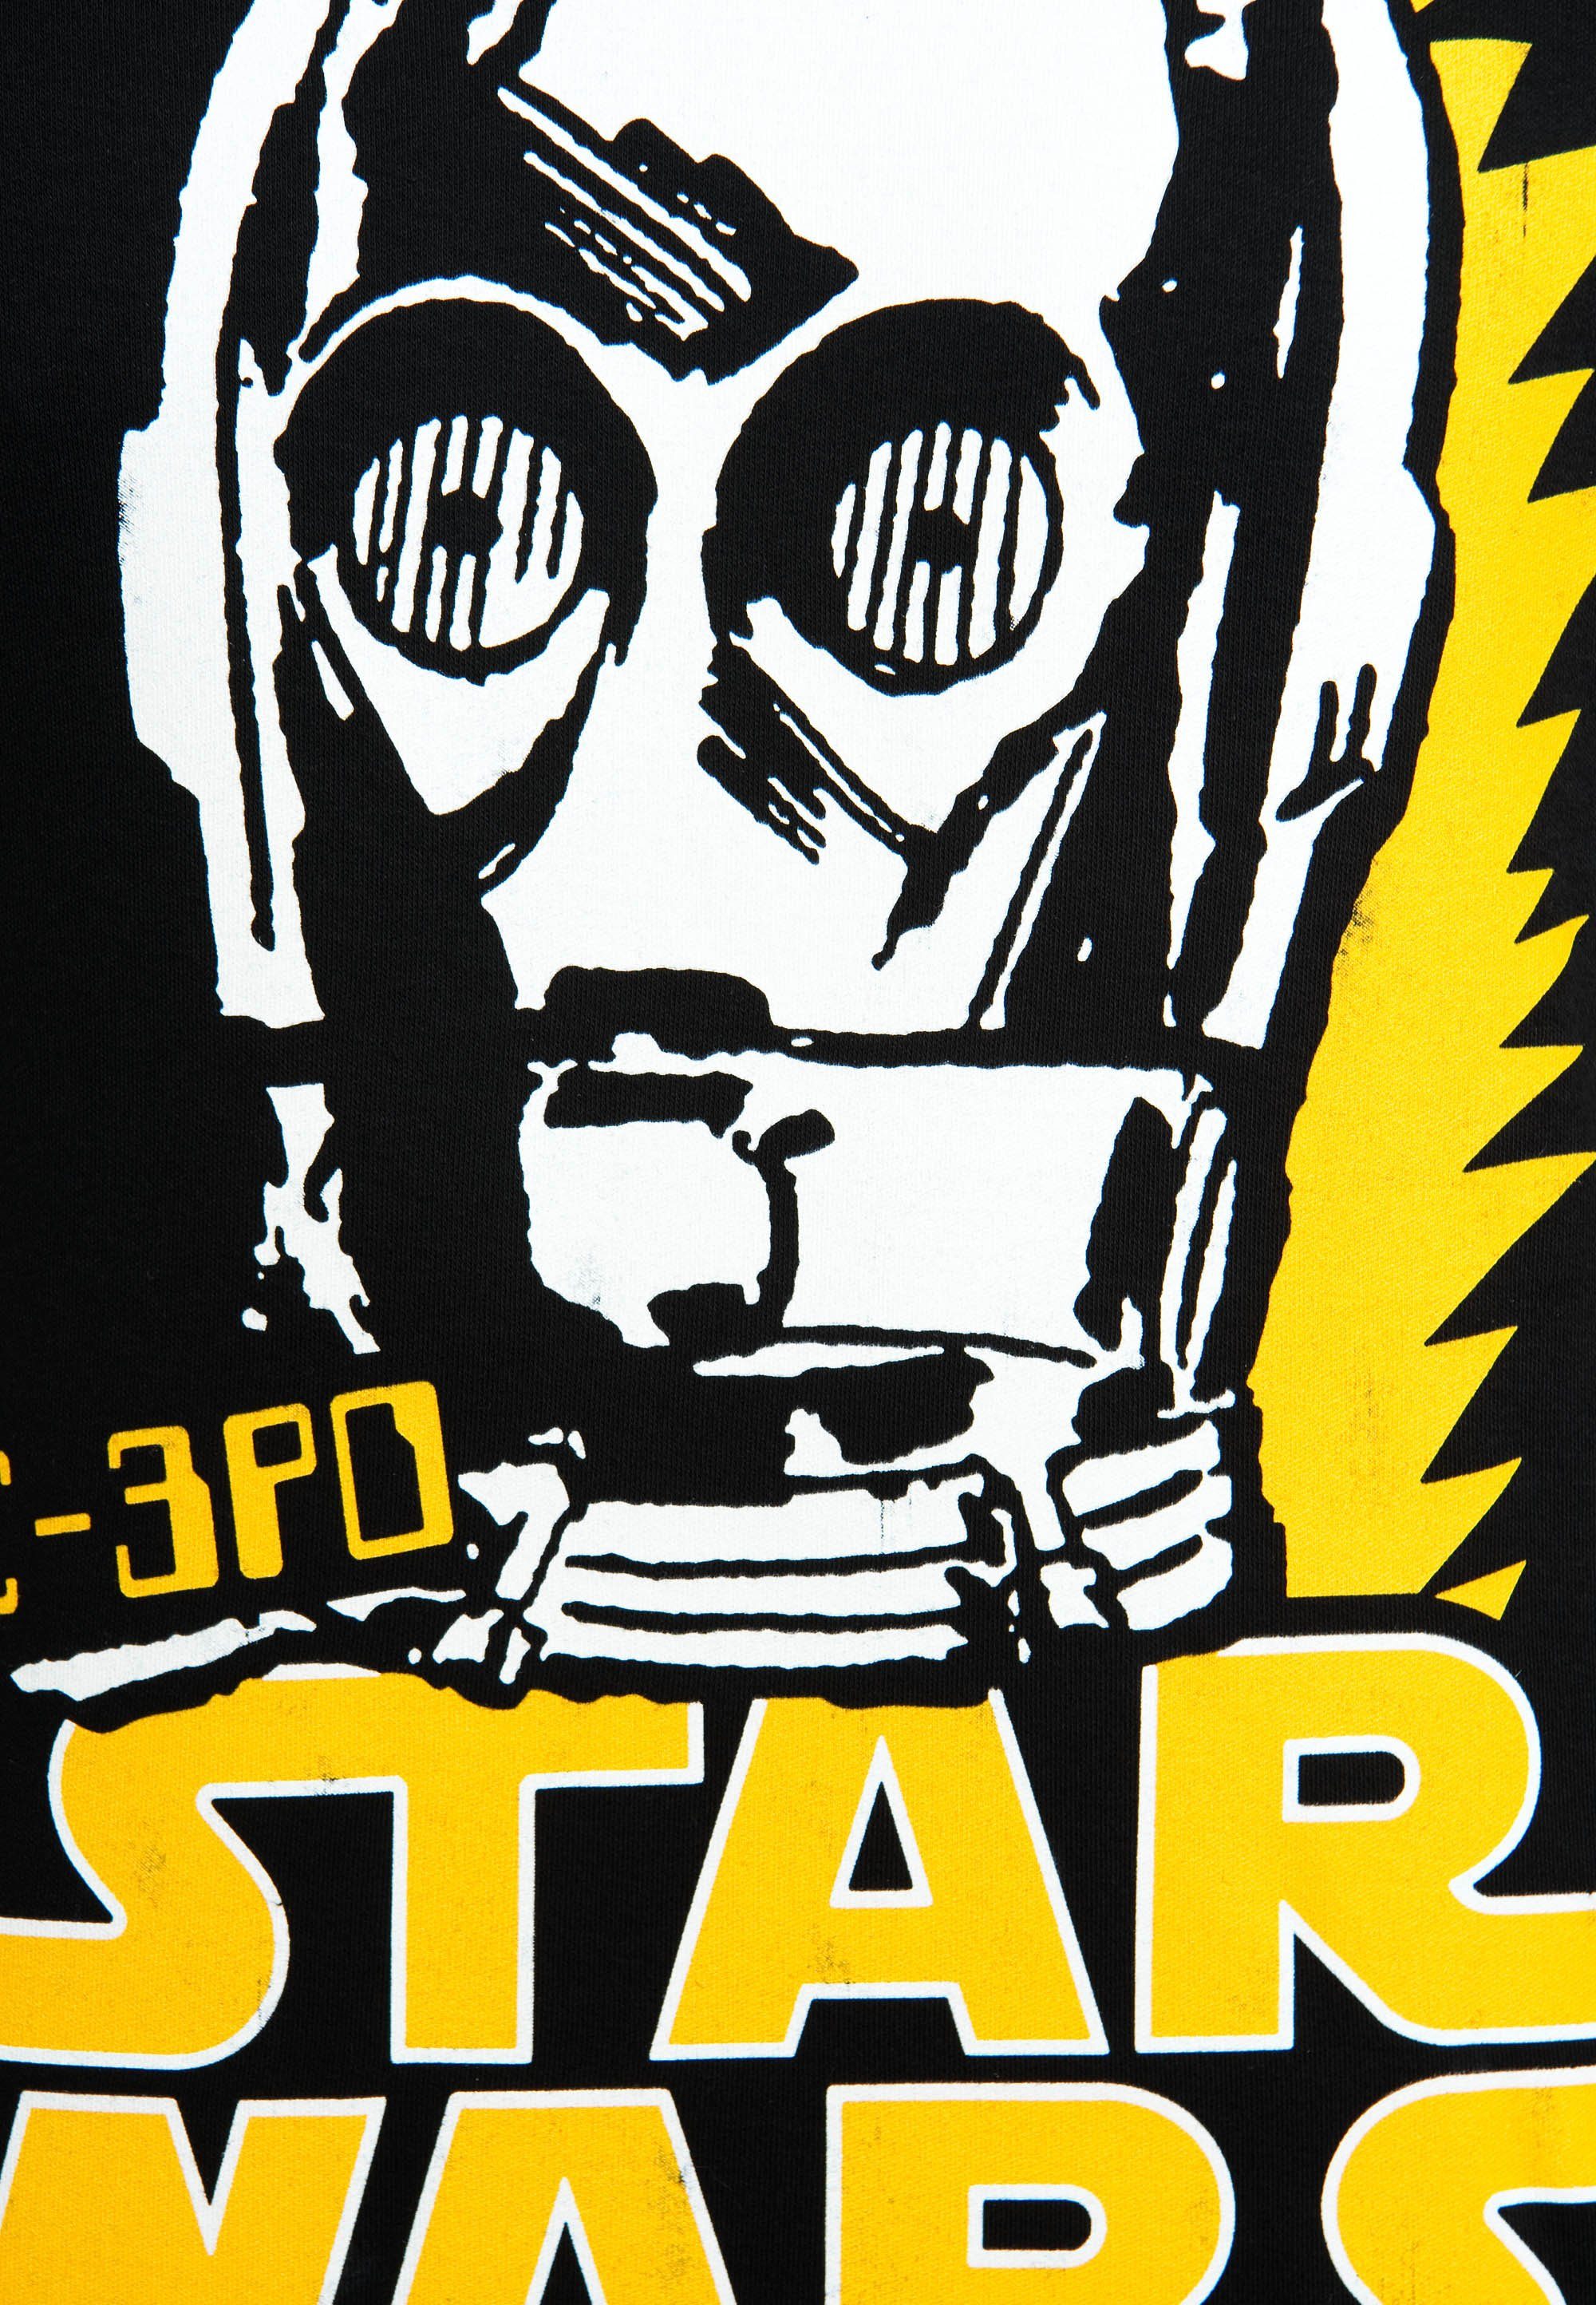 LOGOSHIRT T-Shirt mit C-3PO C-3PO-Print